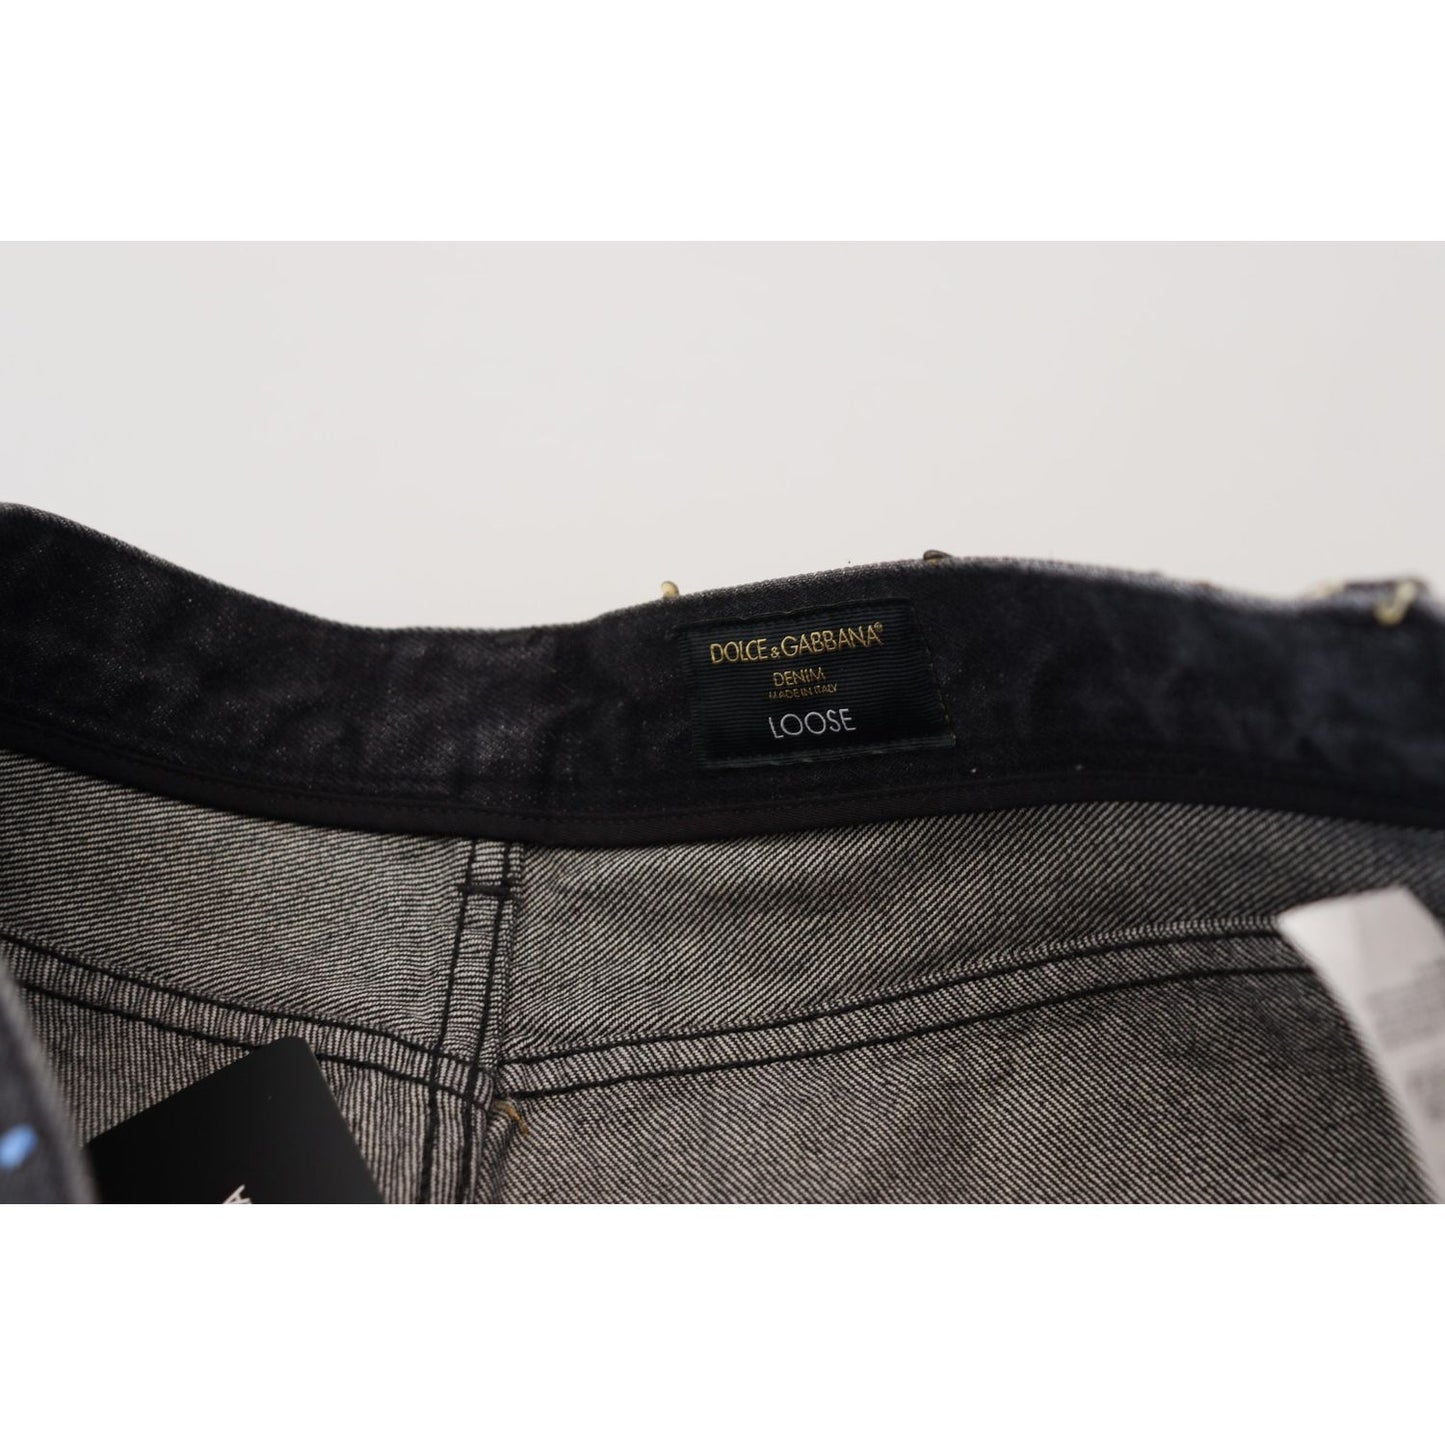 Dolce & Gabbana Elegant Multicolor Printed Denim Pants black-multicolor-print-tattered-denim-jeans